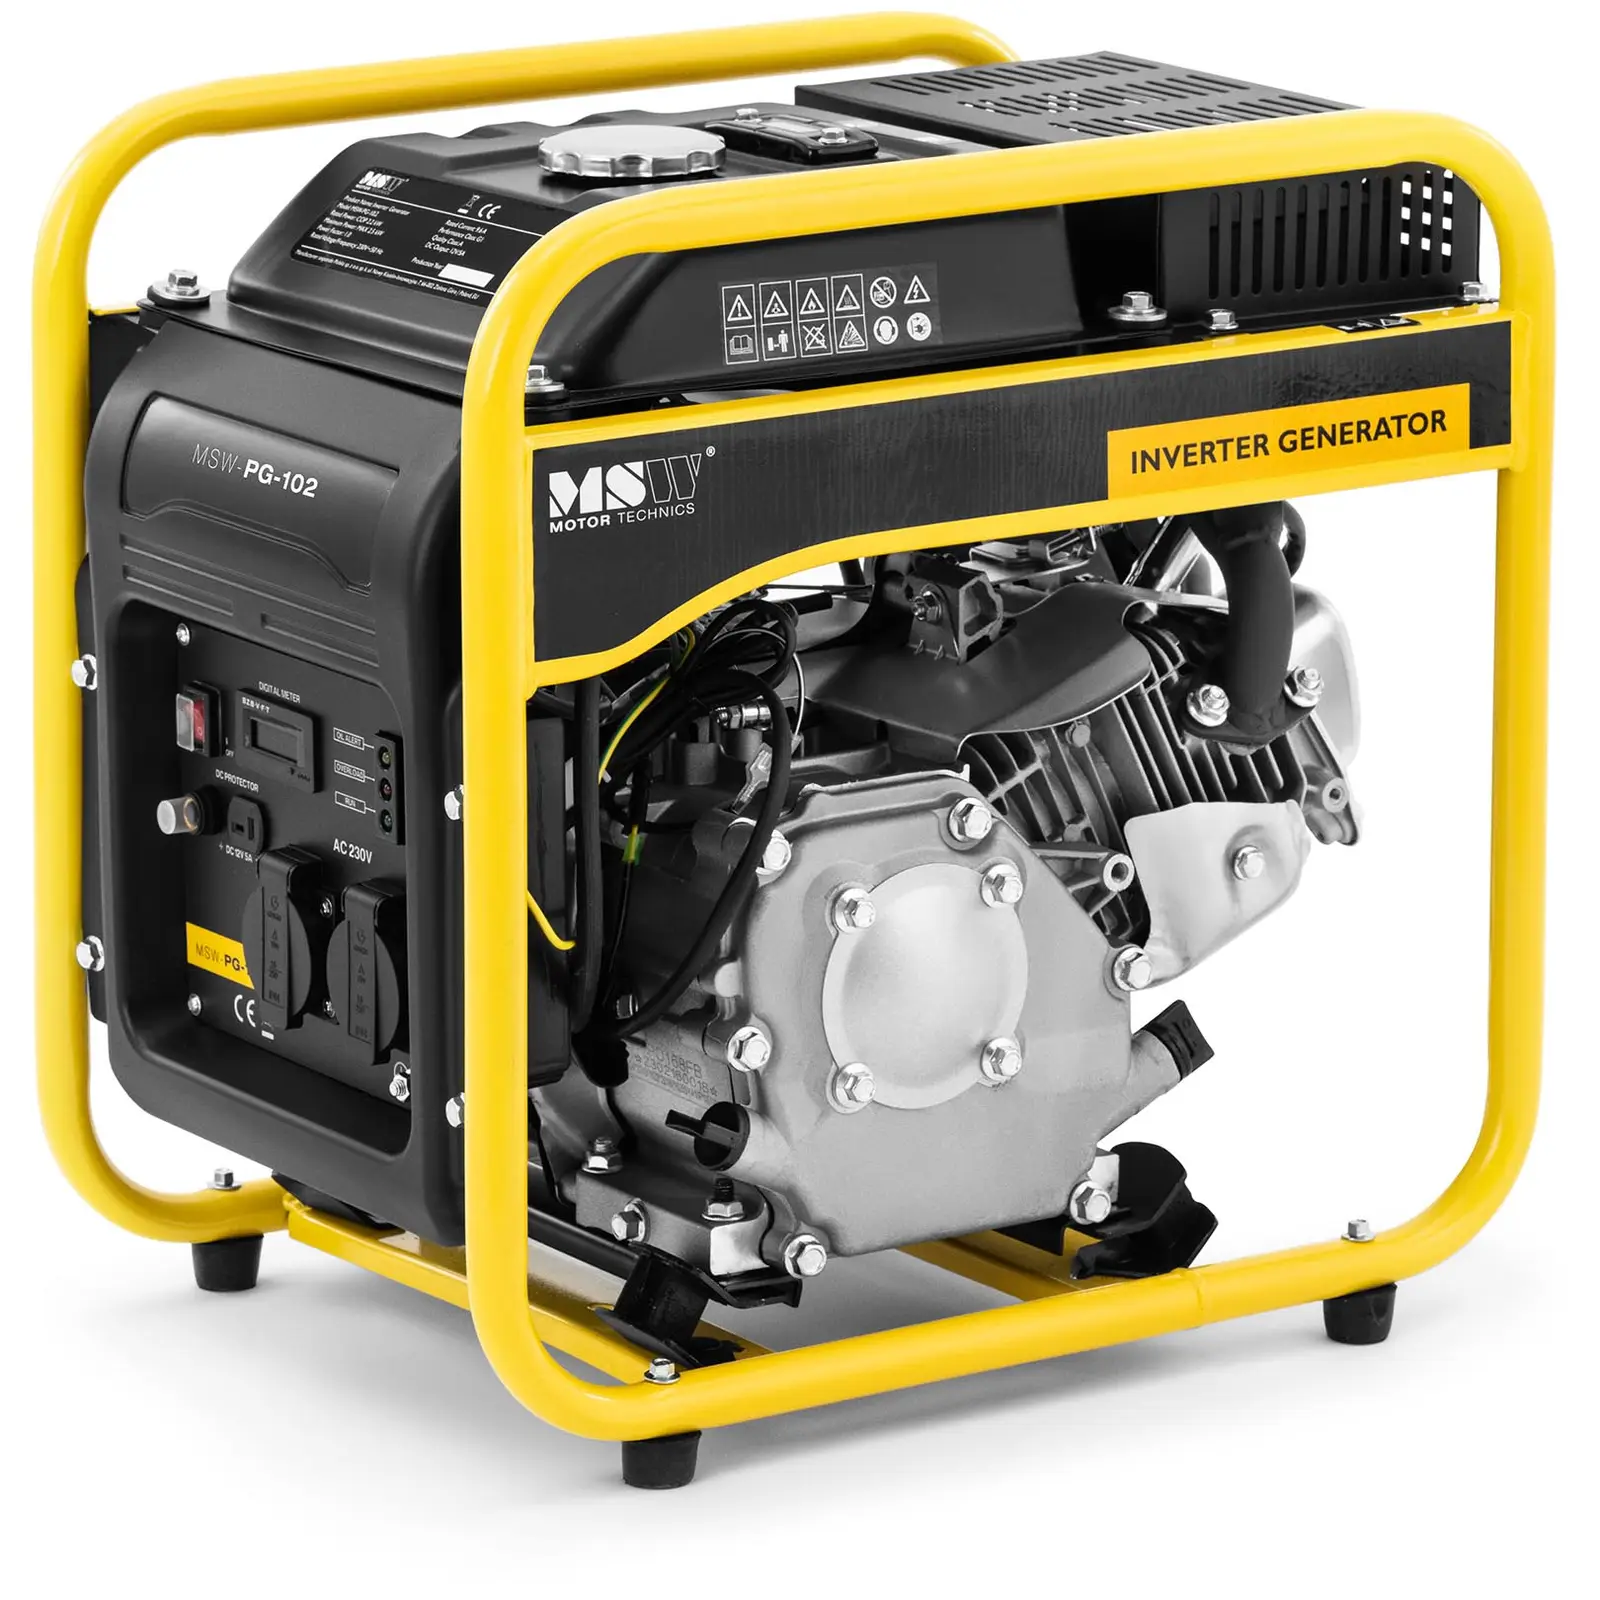 Inverter power generator petrol - 3200 W - 230 V AC - manual start